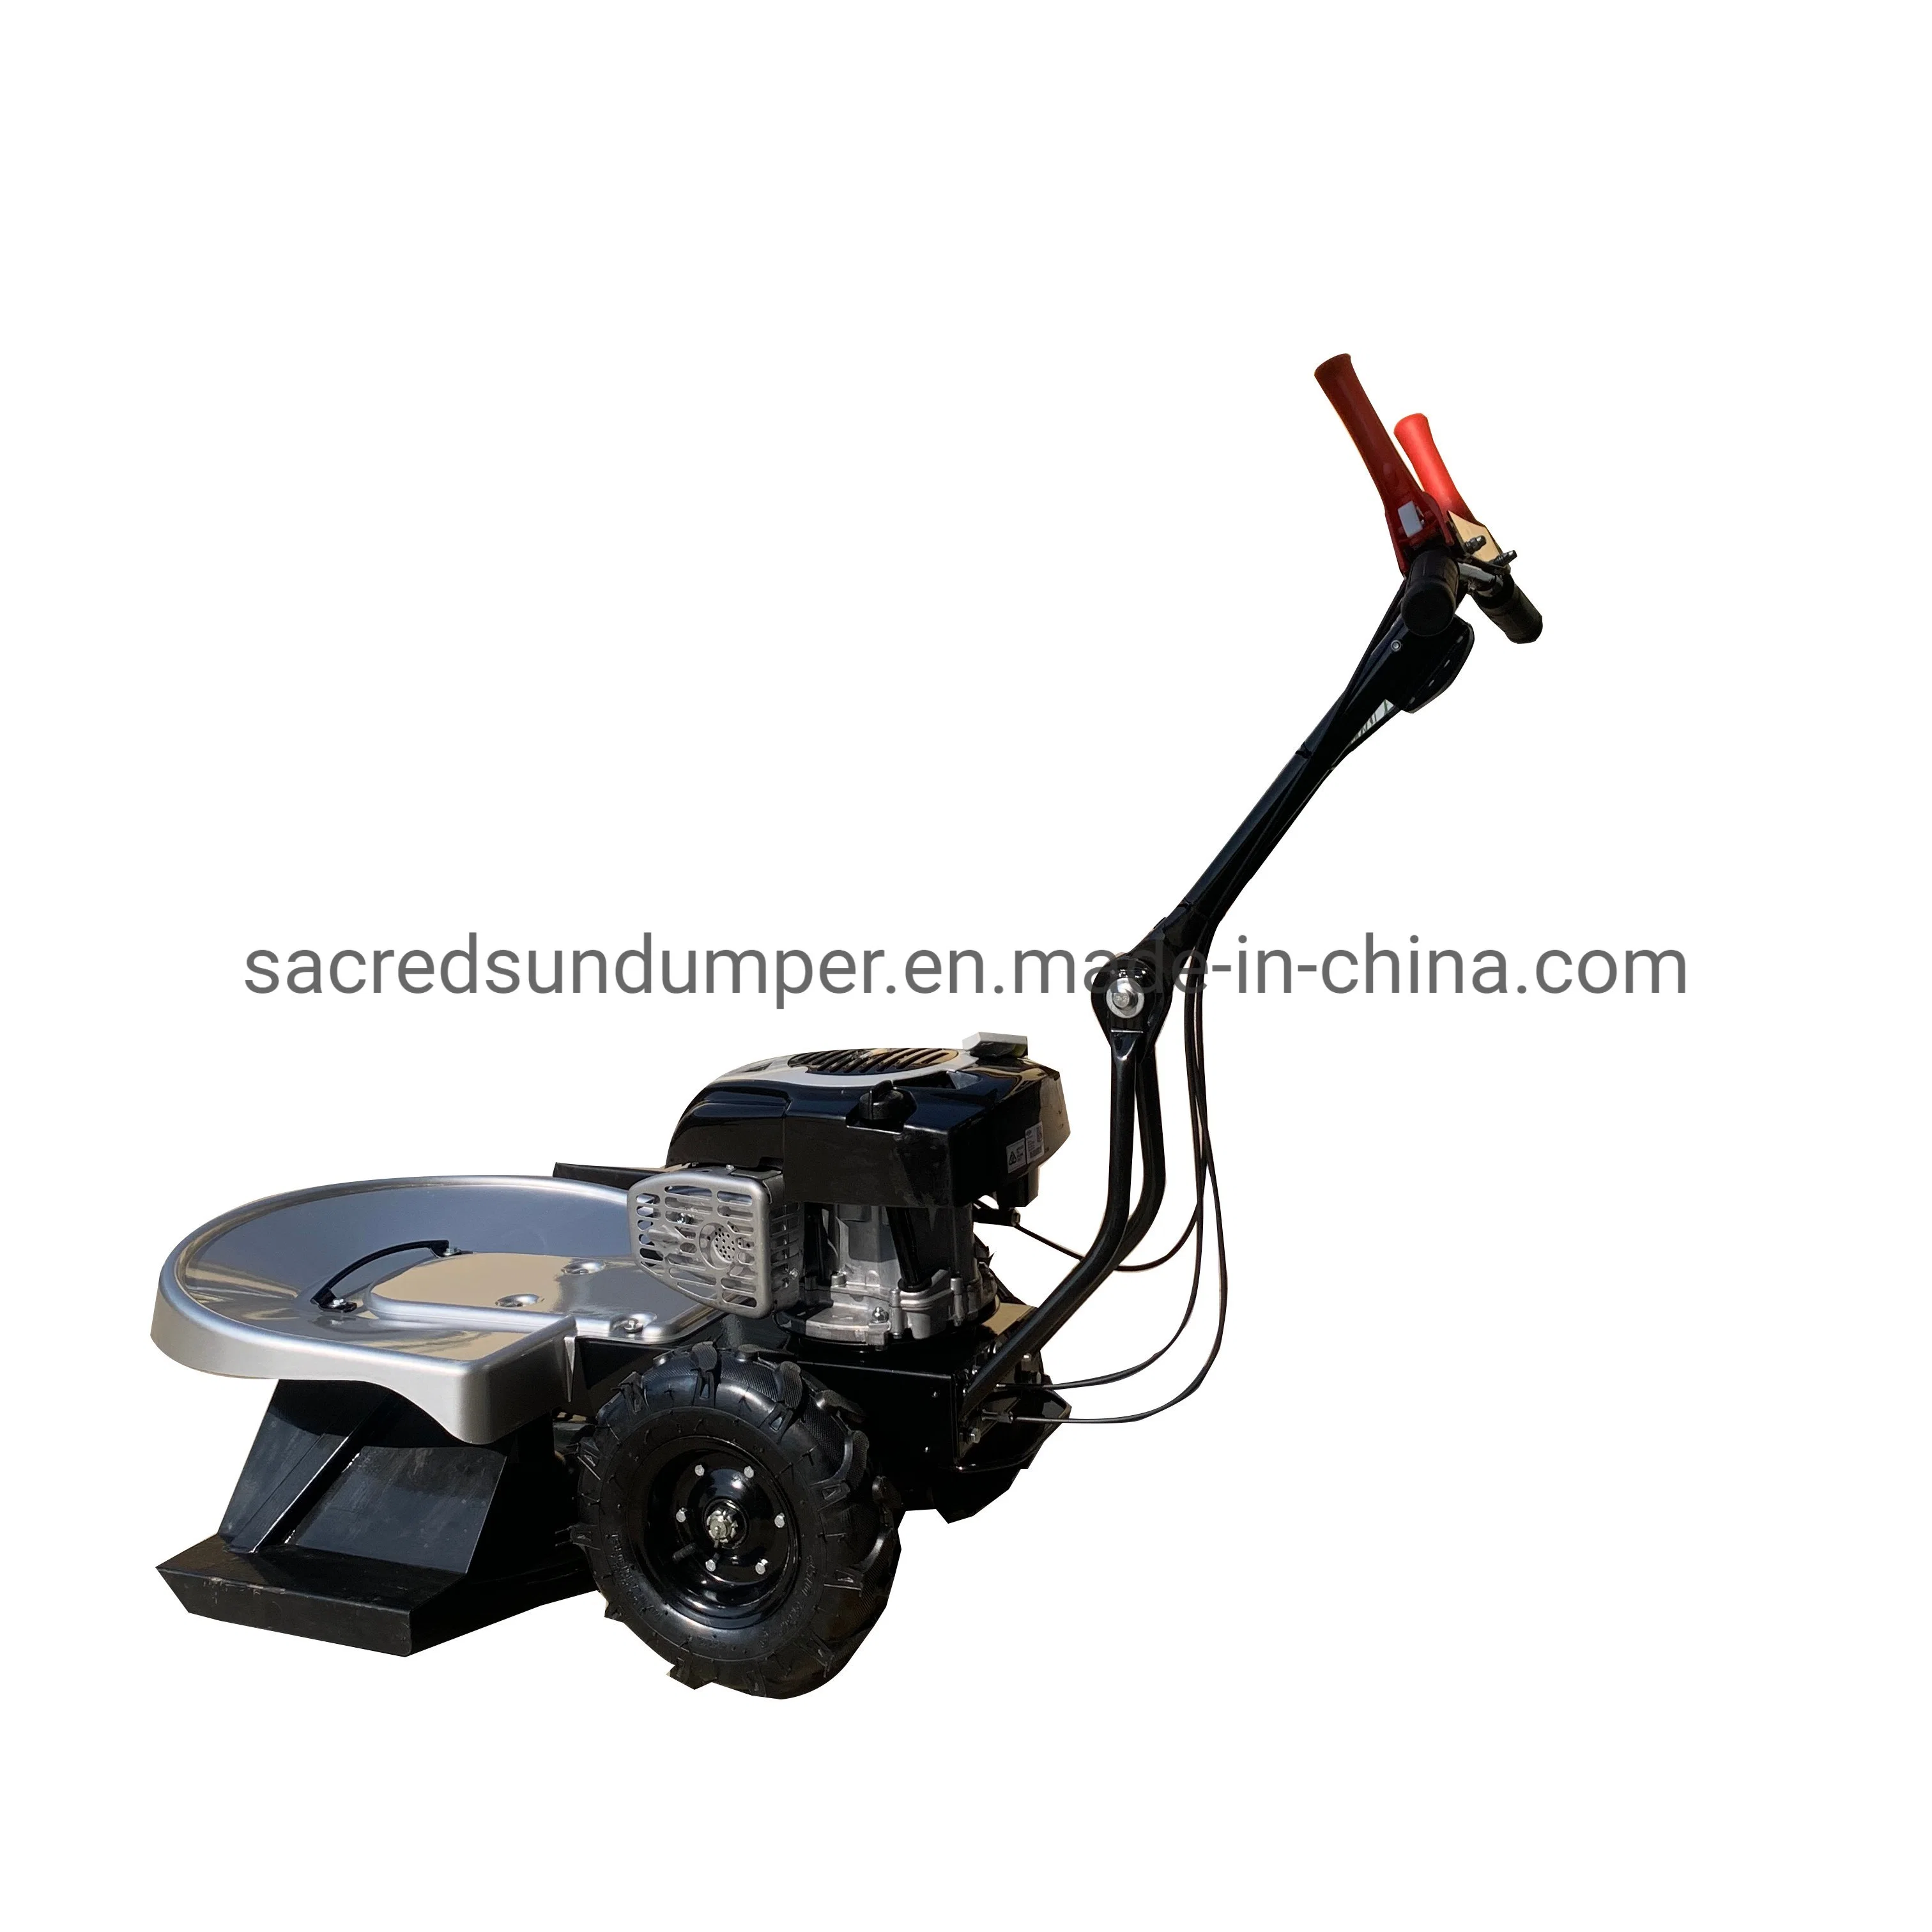 Lawn Mower (Self propelled) Self-Propelled Lawn Mower Grass Mower Weed Cutter Garden Tool